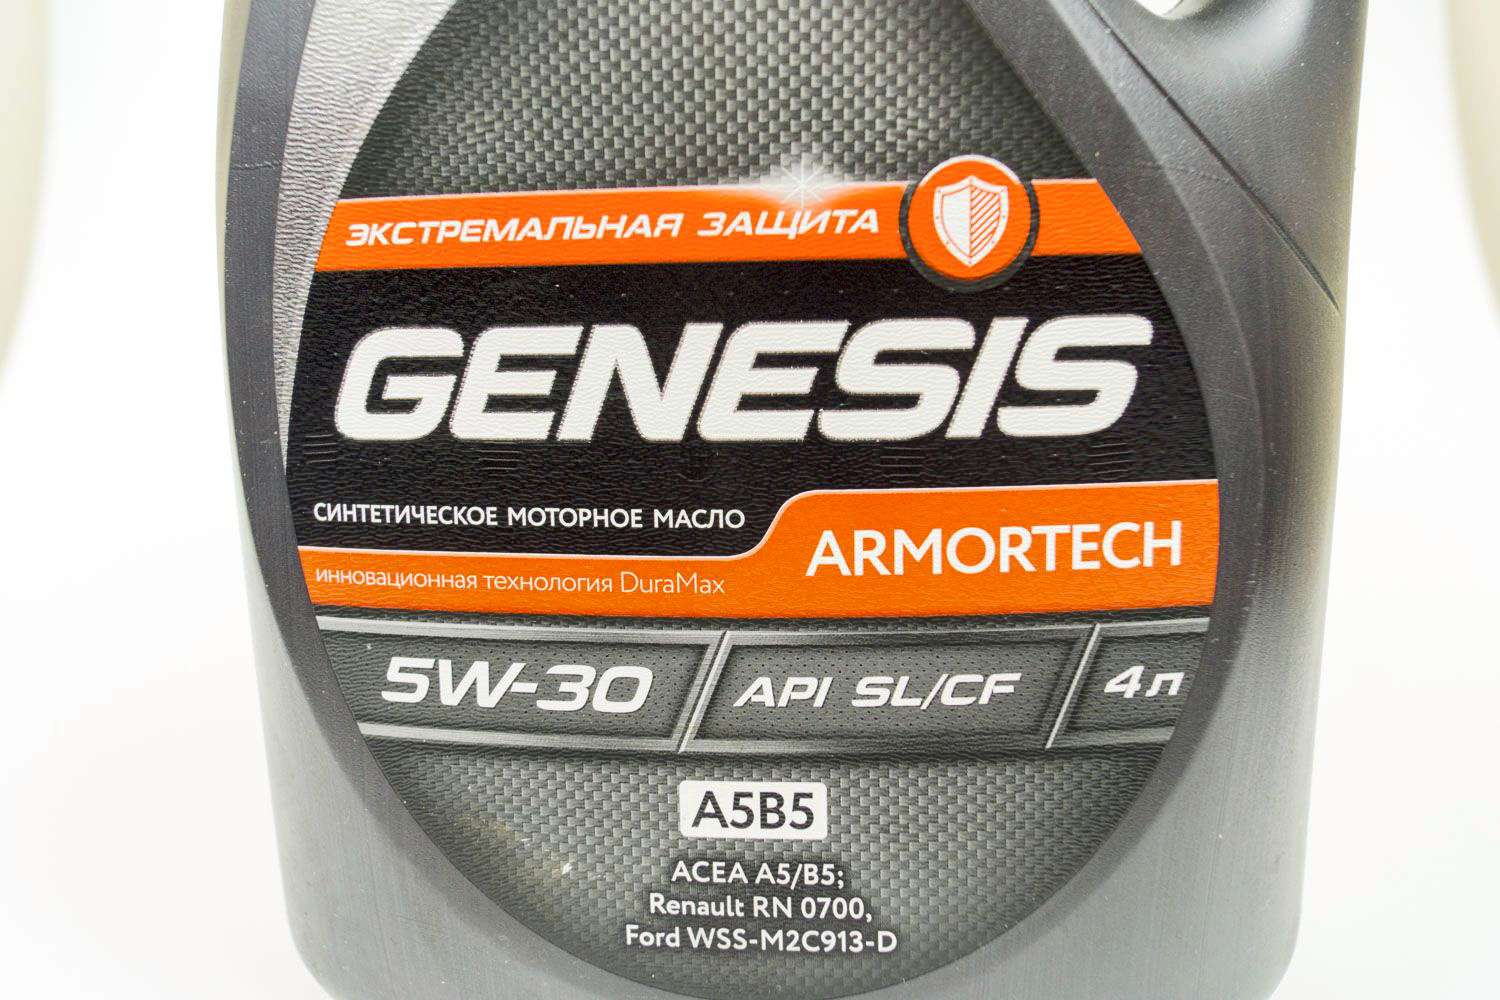 Моторное масло лукойл армортек. Genesis Armortech 5w-30. Lukoil Genesis Armortech 5w-30. Genesis Armortech 5w30 защита. Lukoil Genesis 5w30 SL/CF a5/b5.